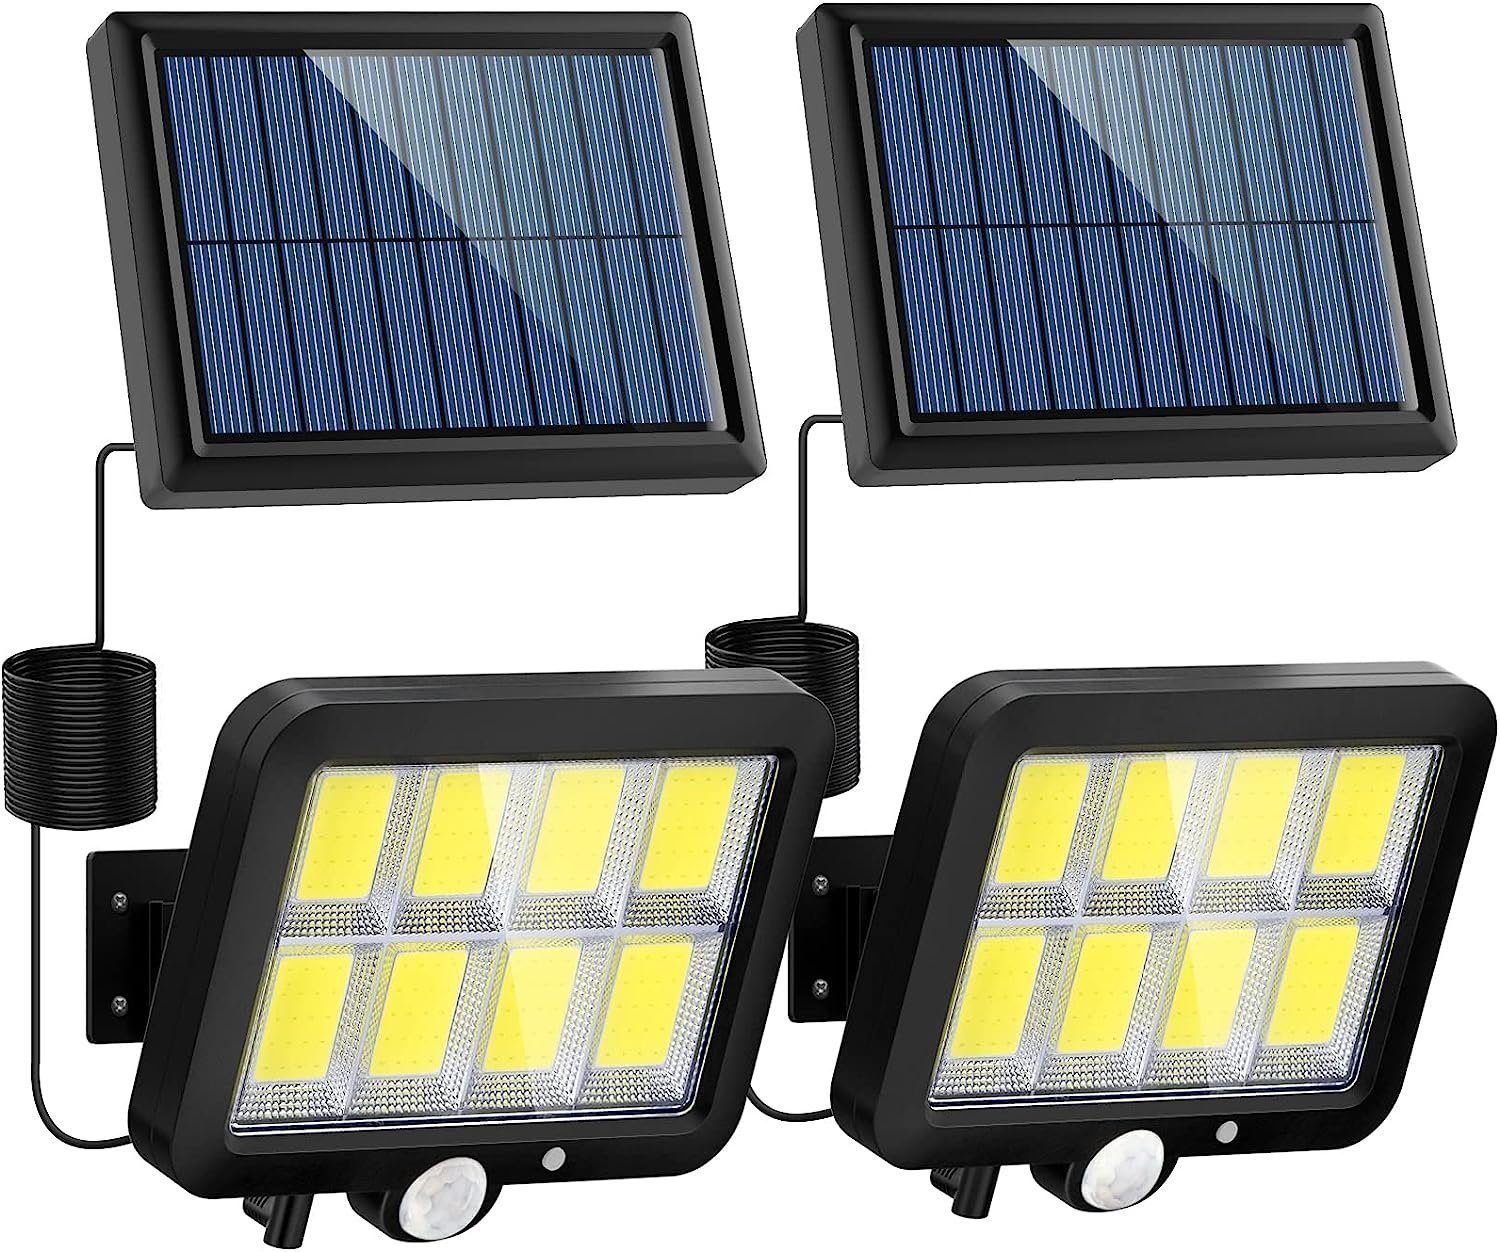 https://i.otto.de/i/otto/d585d846-cd43-4de4-a255-ec4ff0d5155d/dopwii-led-solarleuchte-2pcs-solarlampe-3-modi-mit-bewegungsmelder-5m-kabel-160cob-lampenperle-led-fest-integriert.jpg?$formatz$